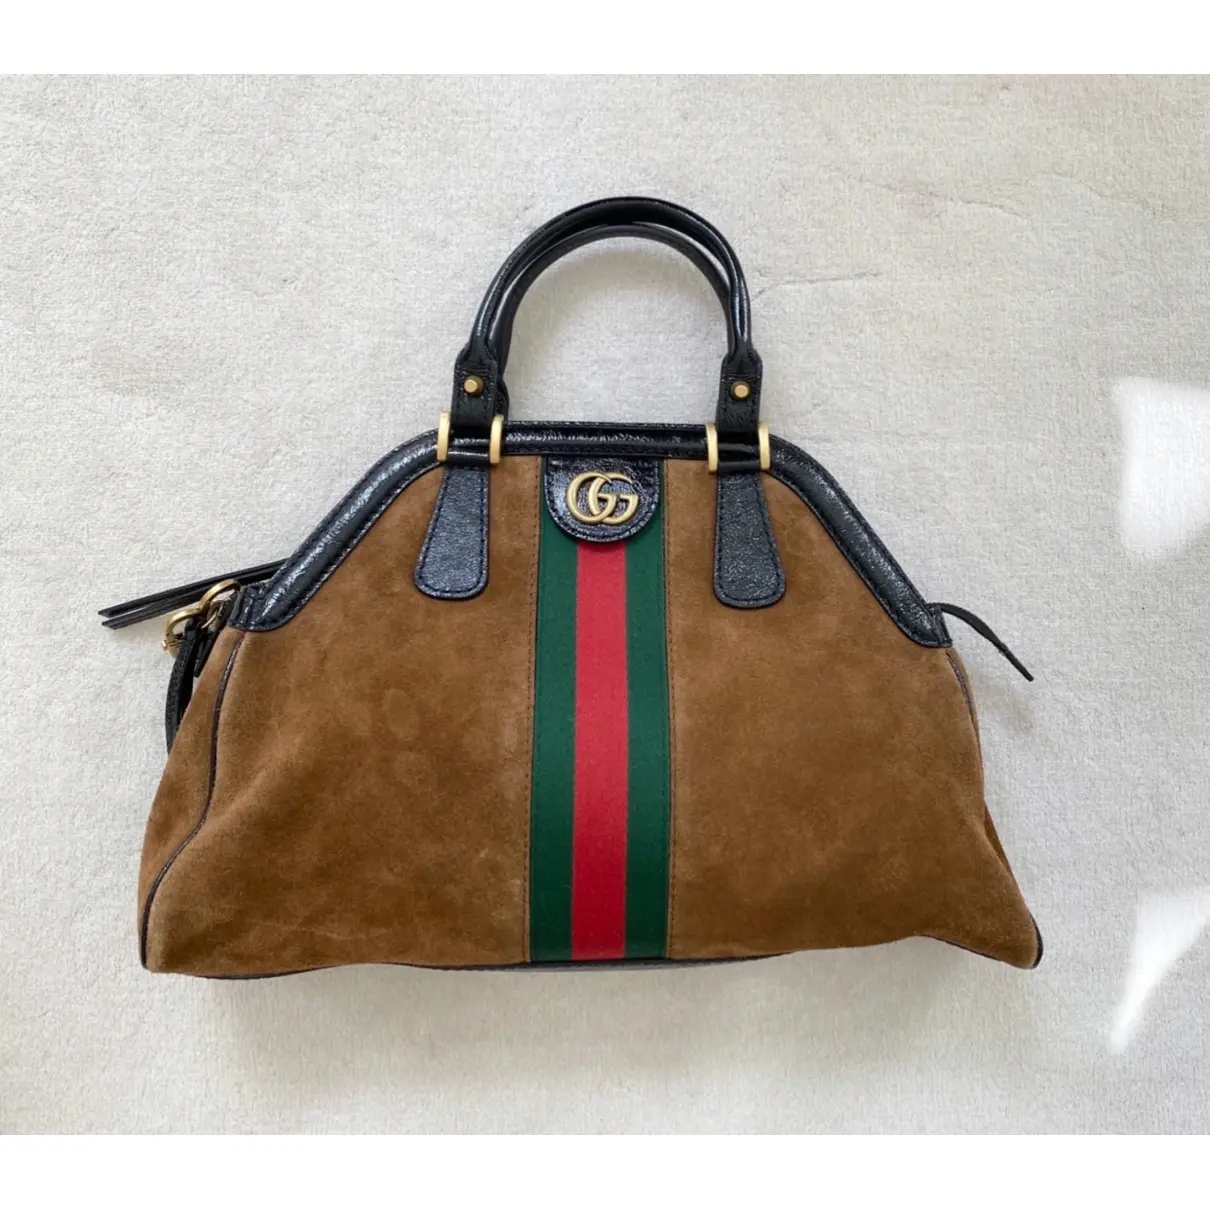 Re(belle) handbag Gucci - Vintage